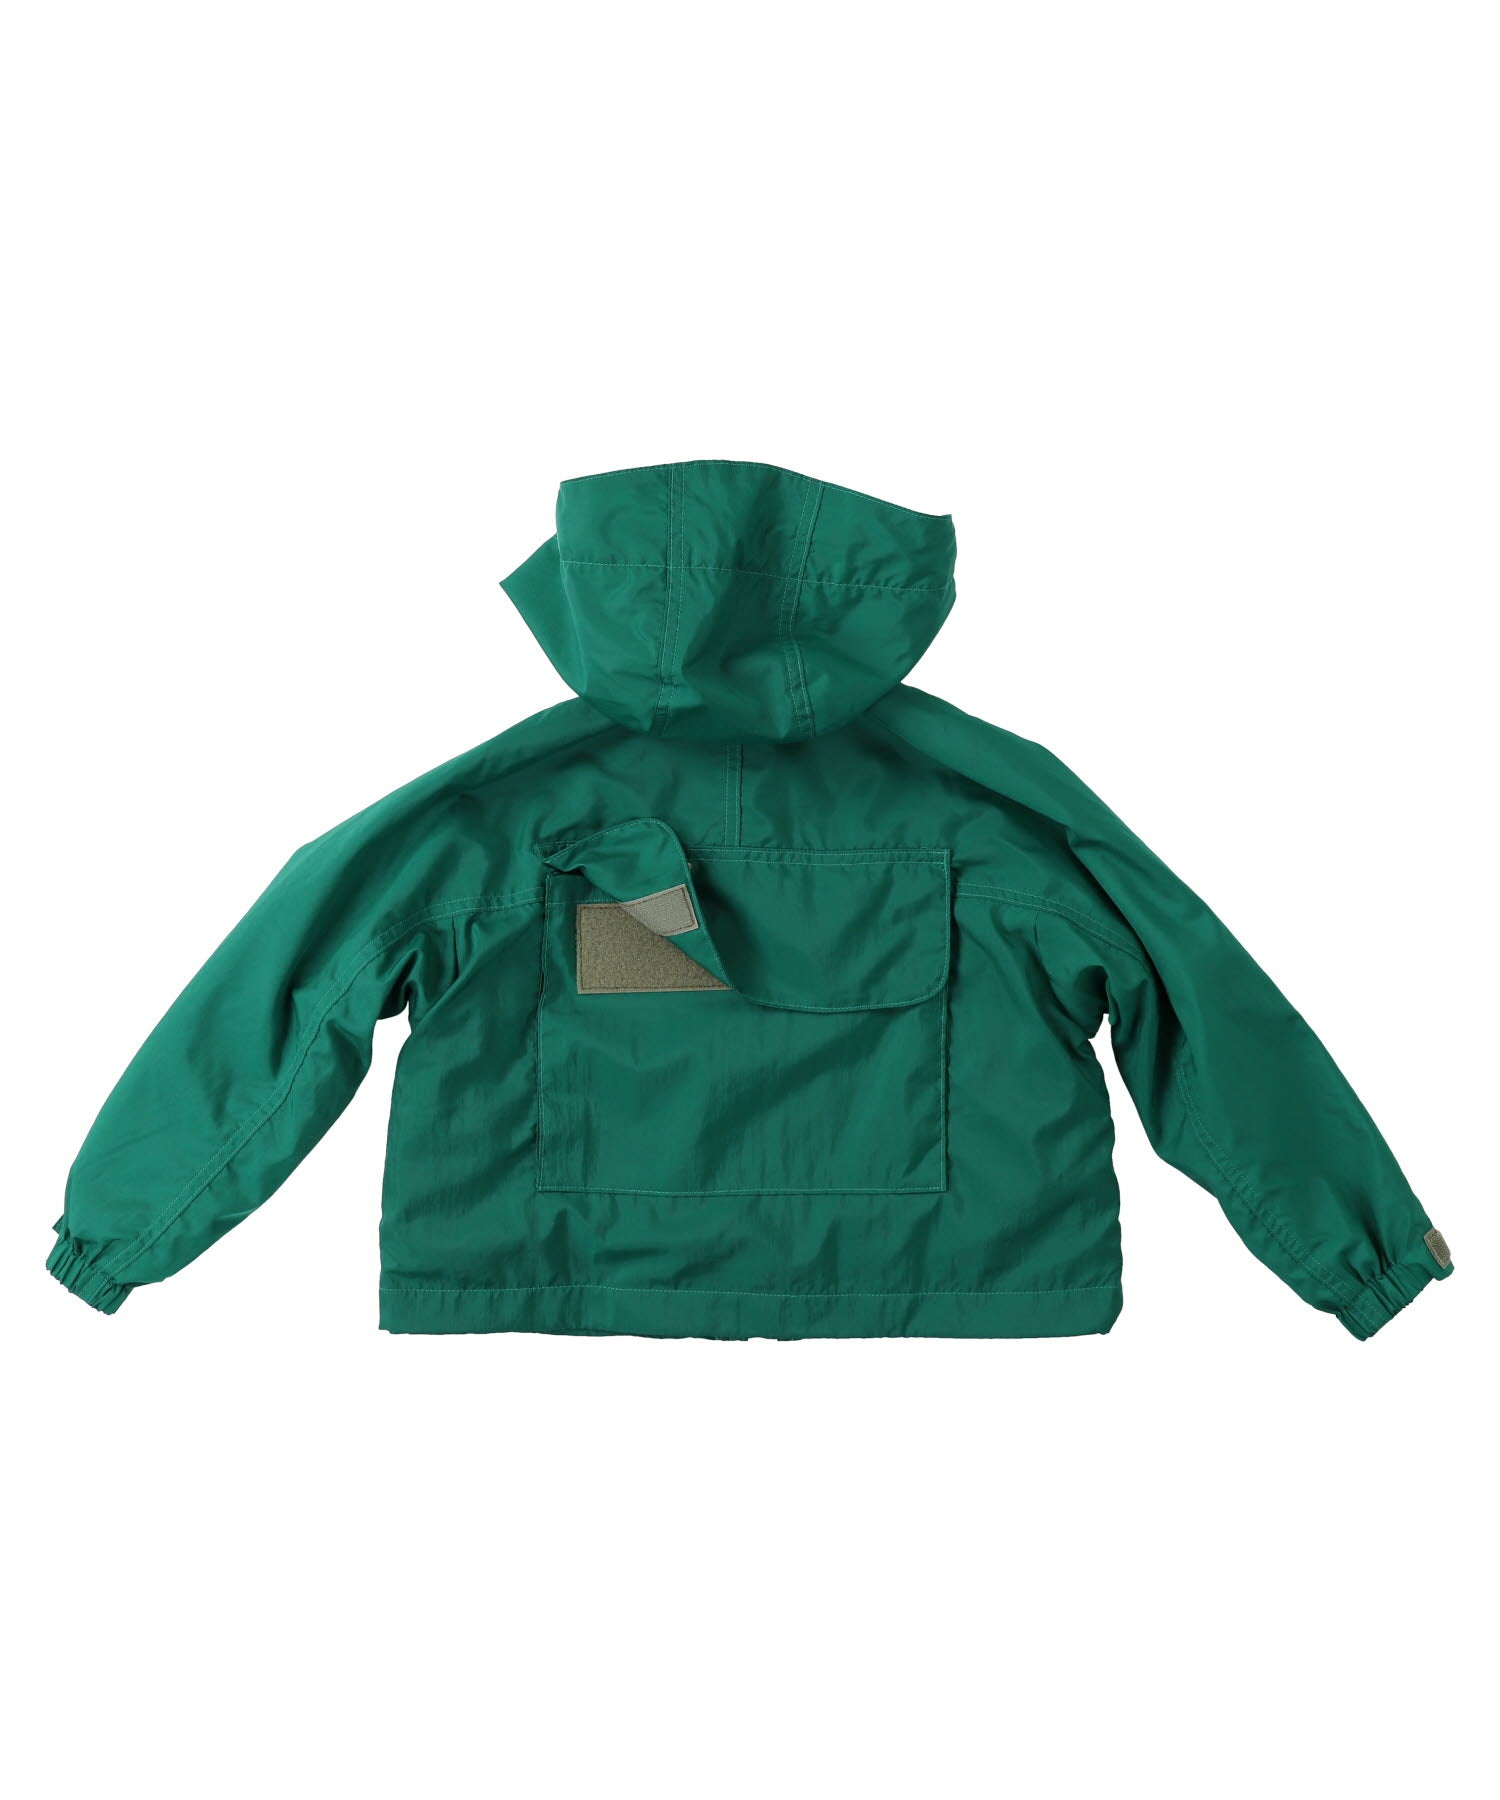 Boys Green Hooded Jacket